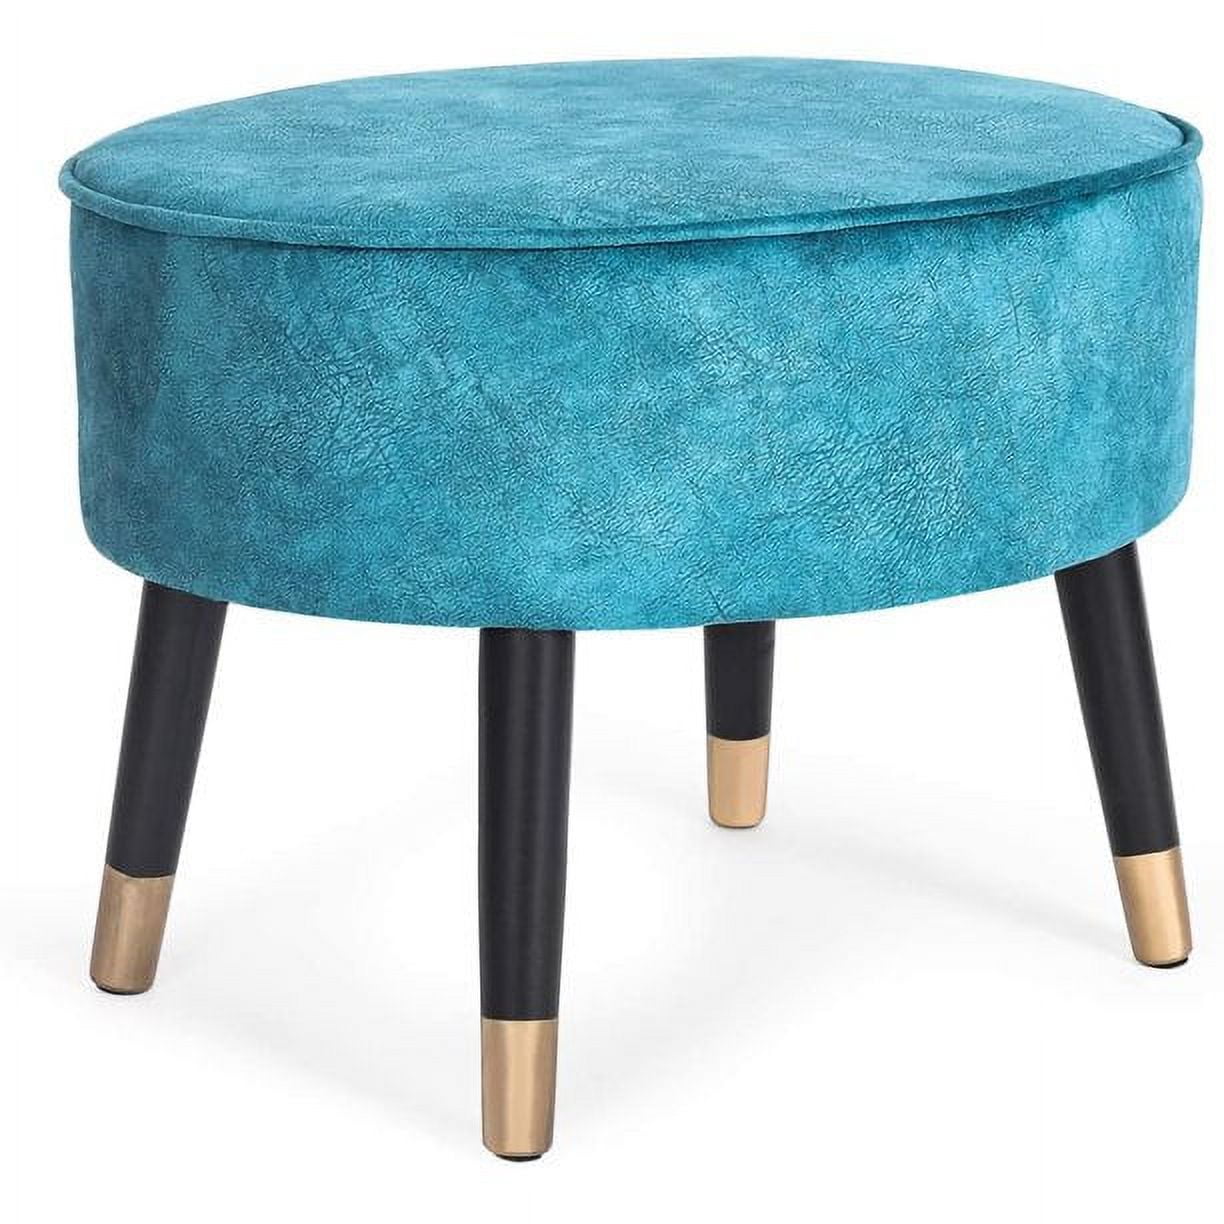 Homebeez Oval Fabric Ottoman Footrest Vanity Stool Blue, Size: Medium